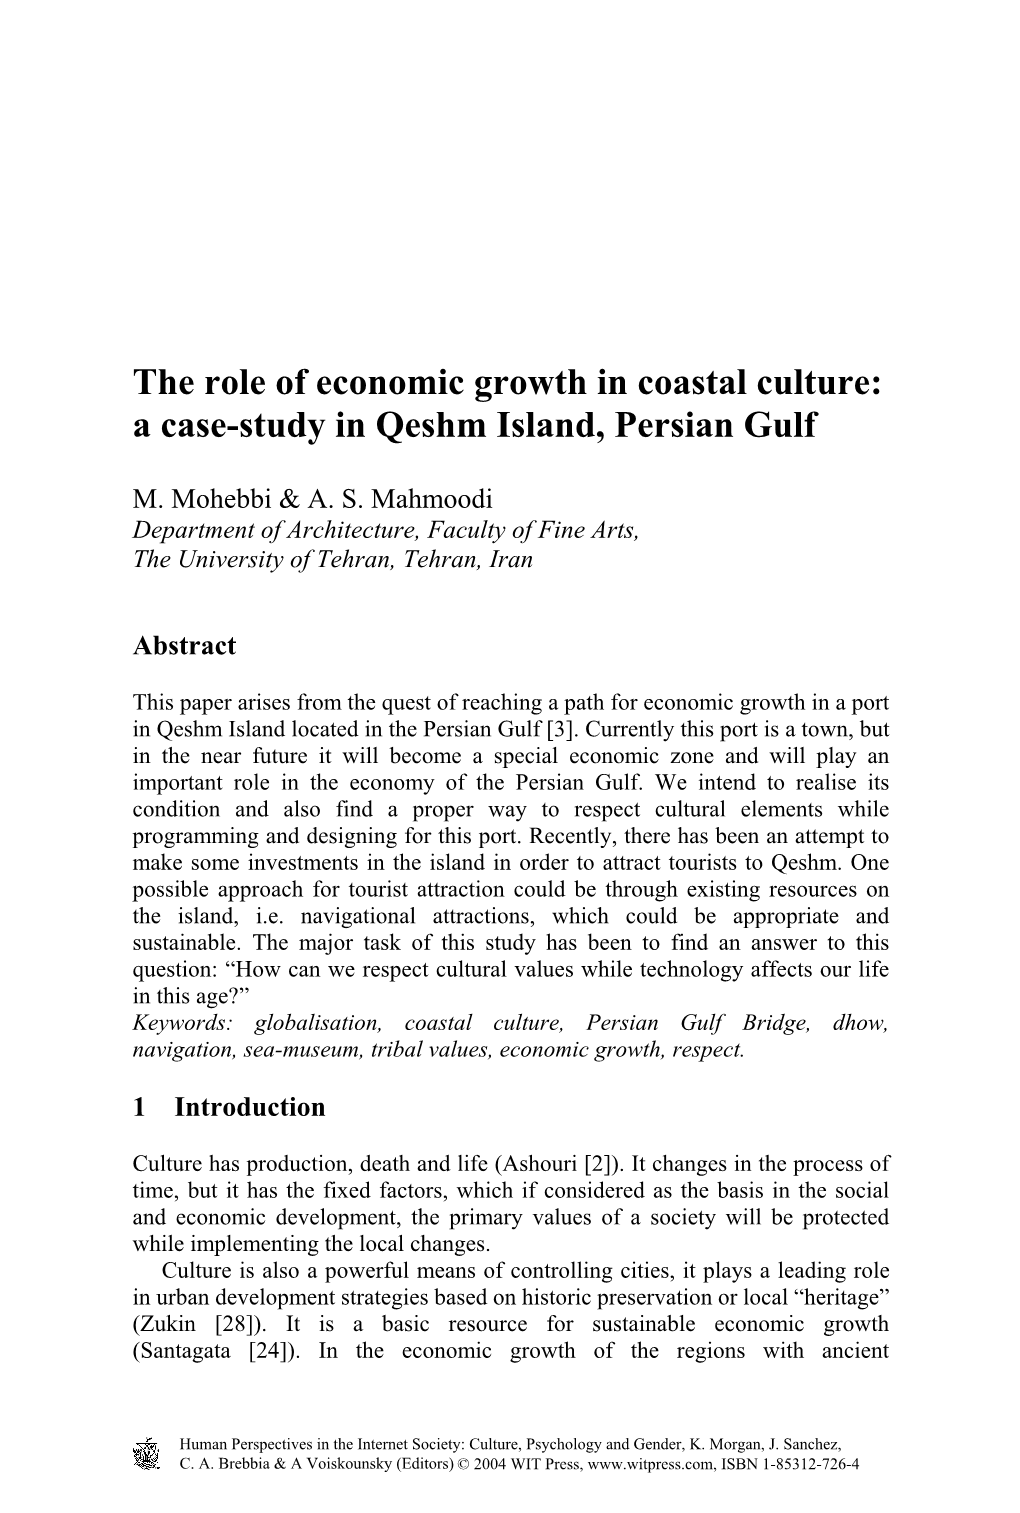 A Case-Study in Qeshm Island, Persian Gulf